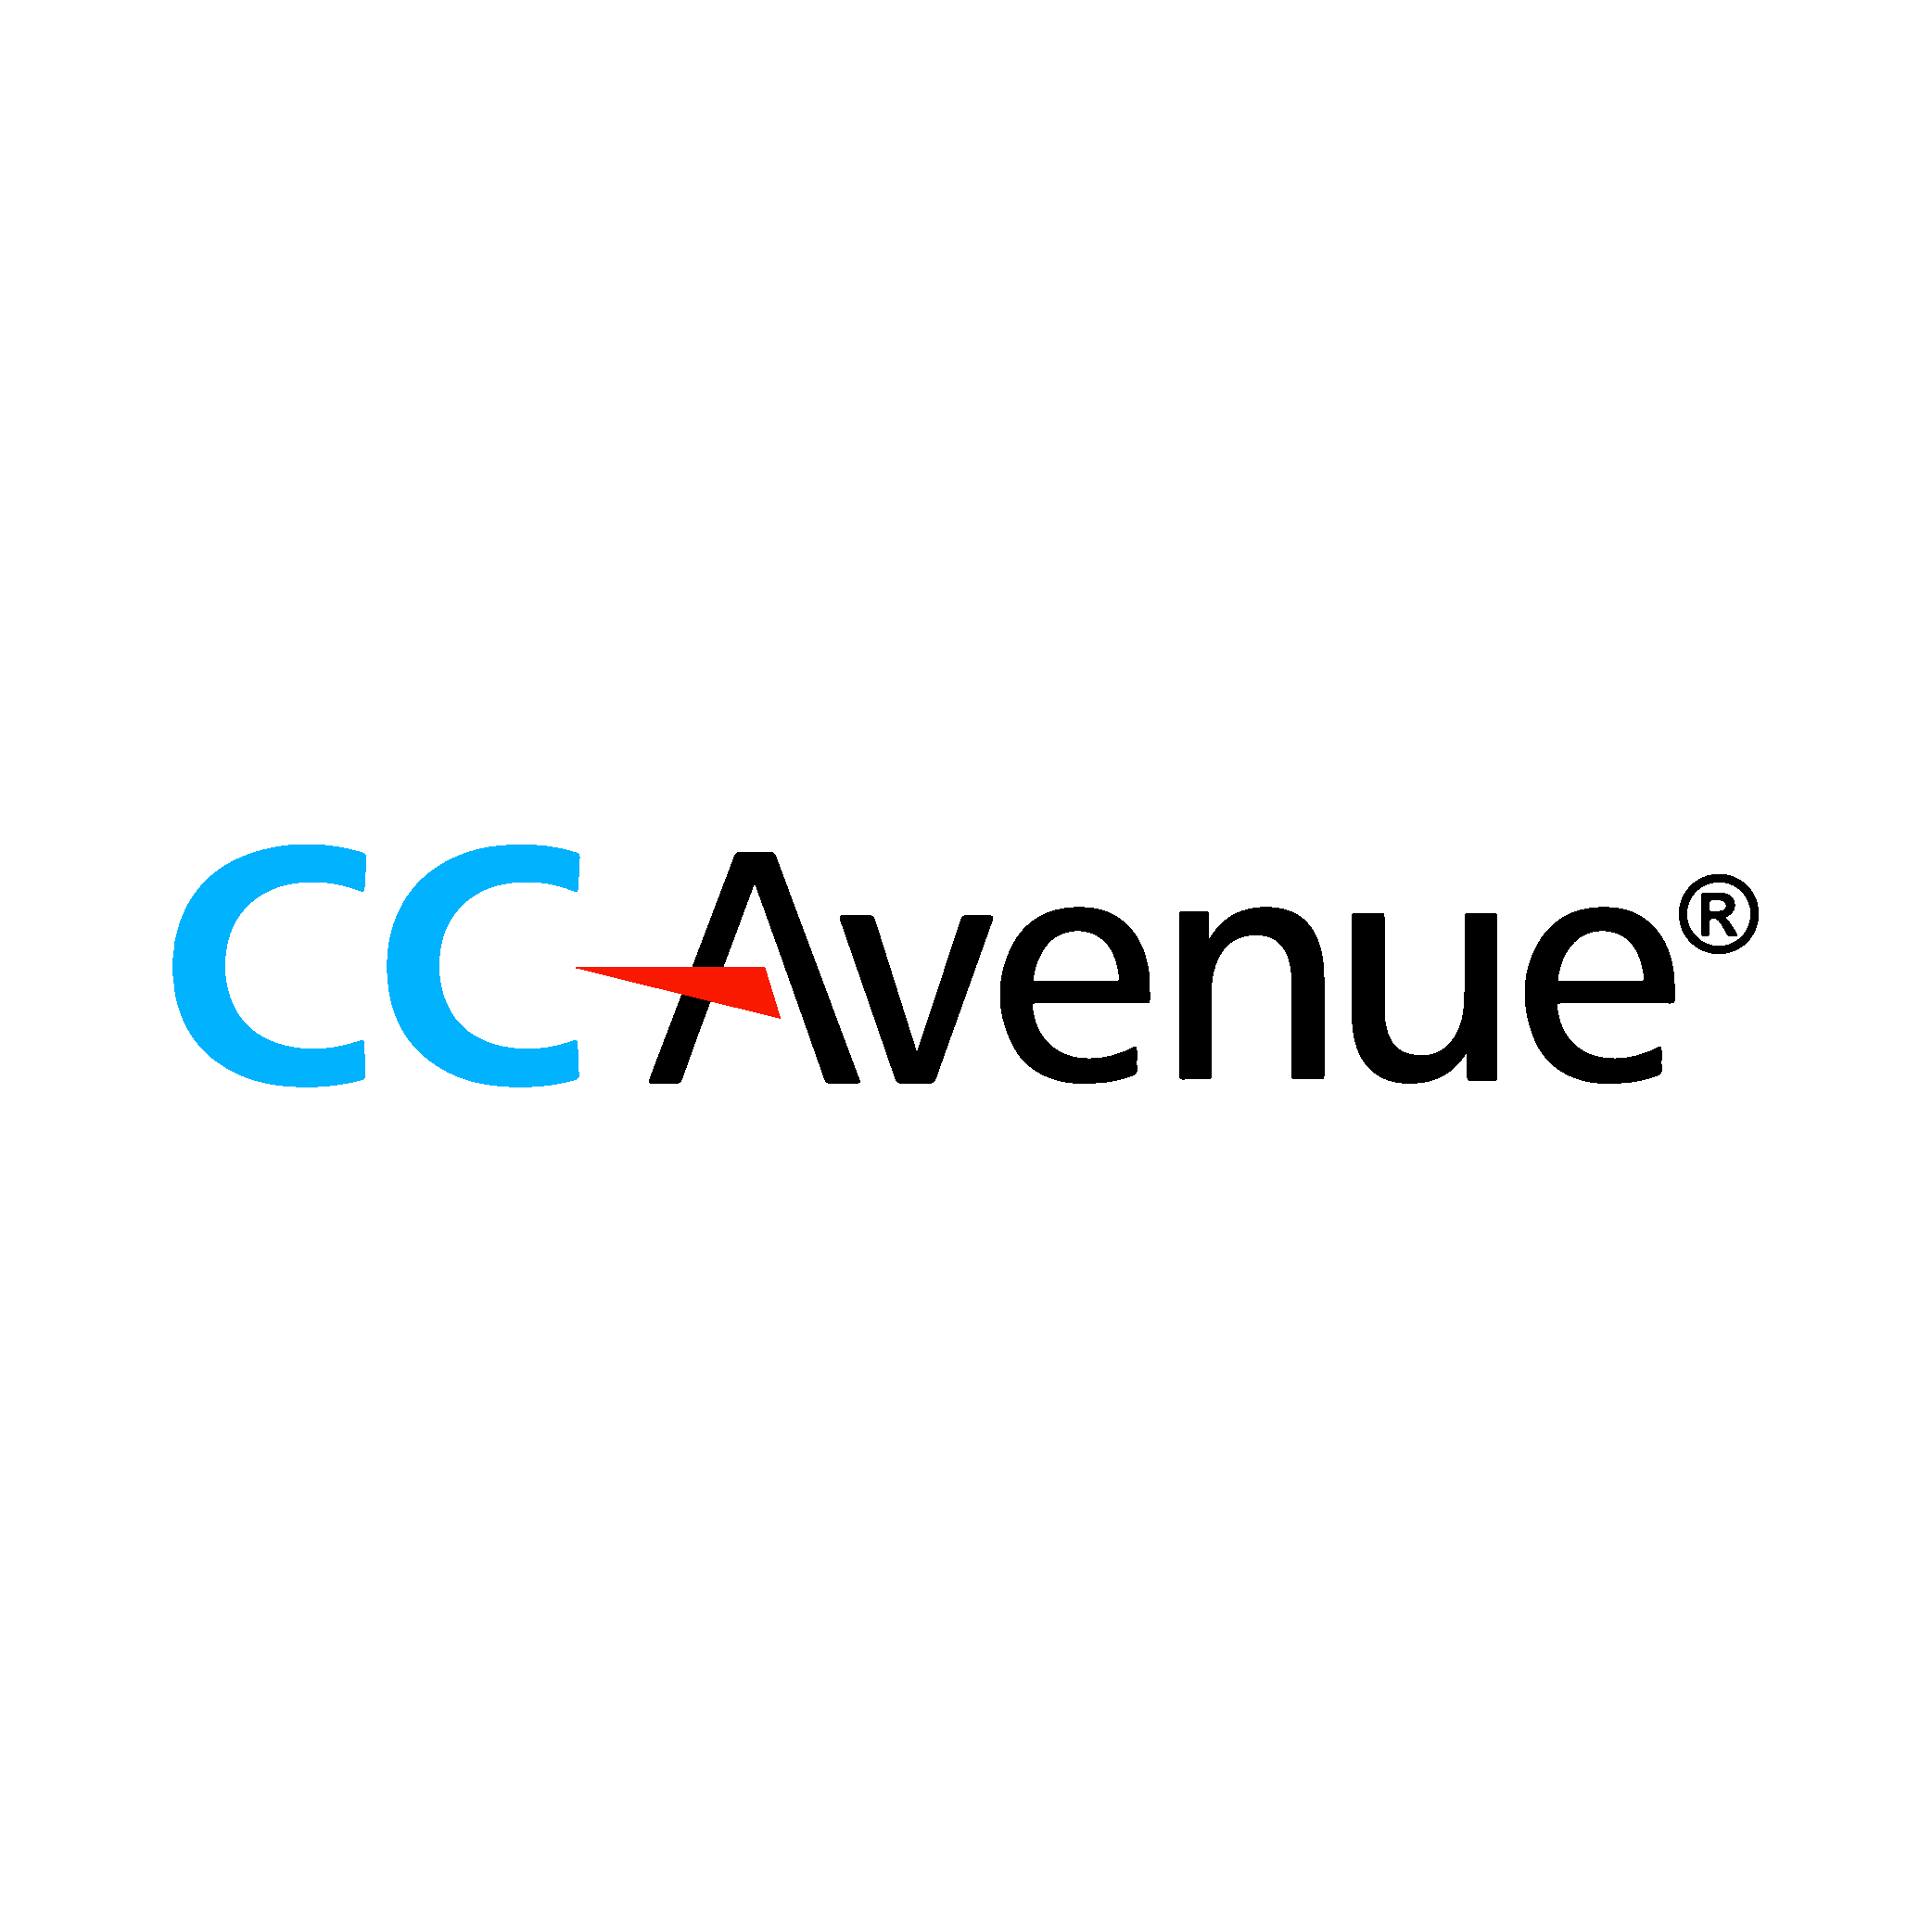 CC Avenue